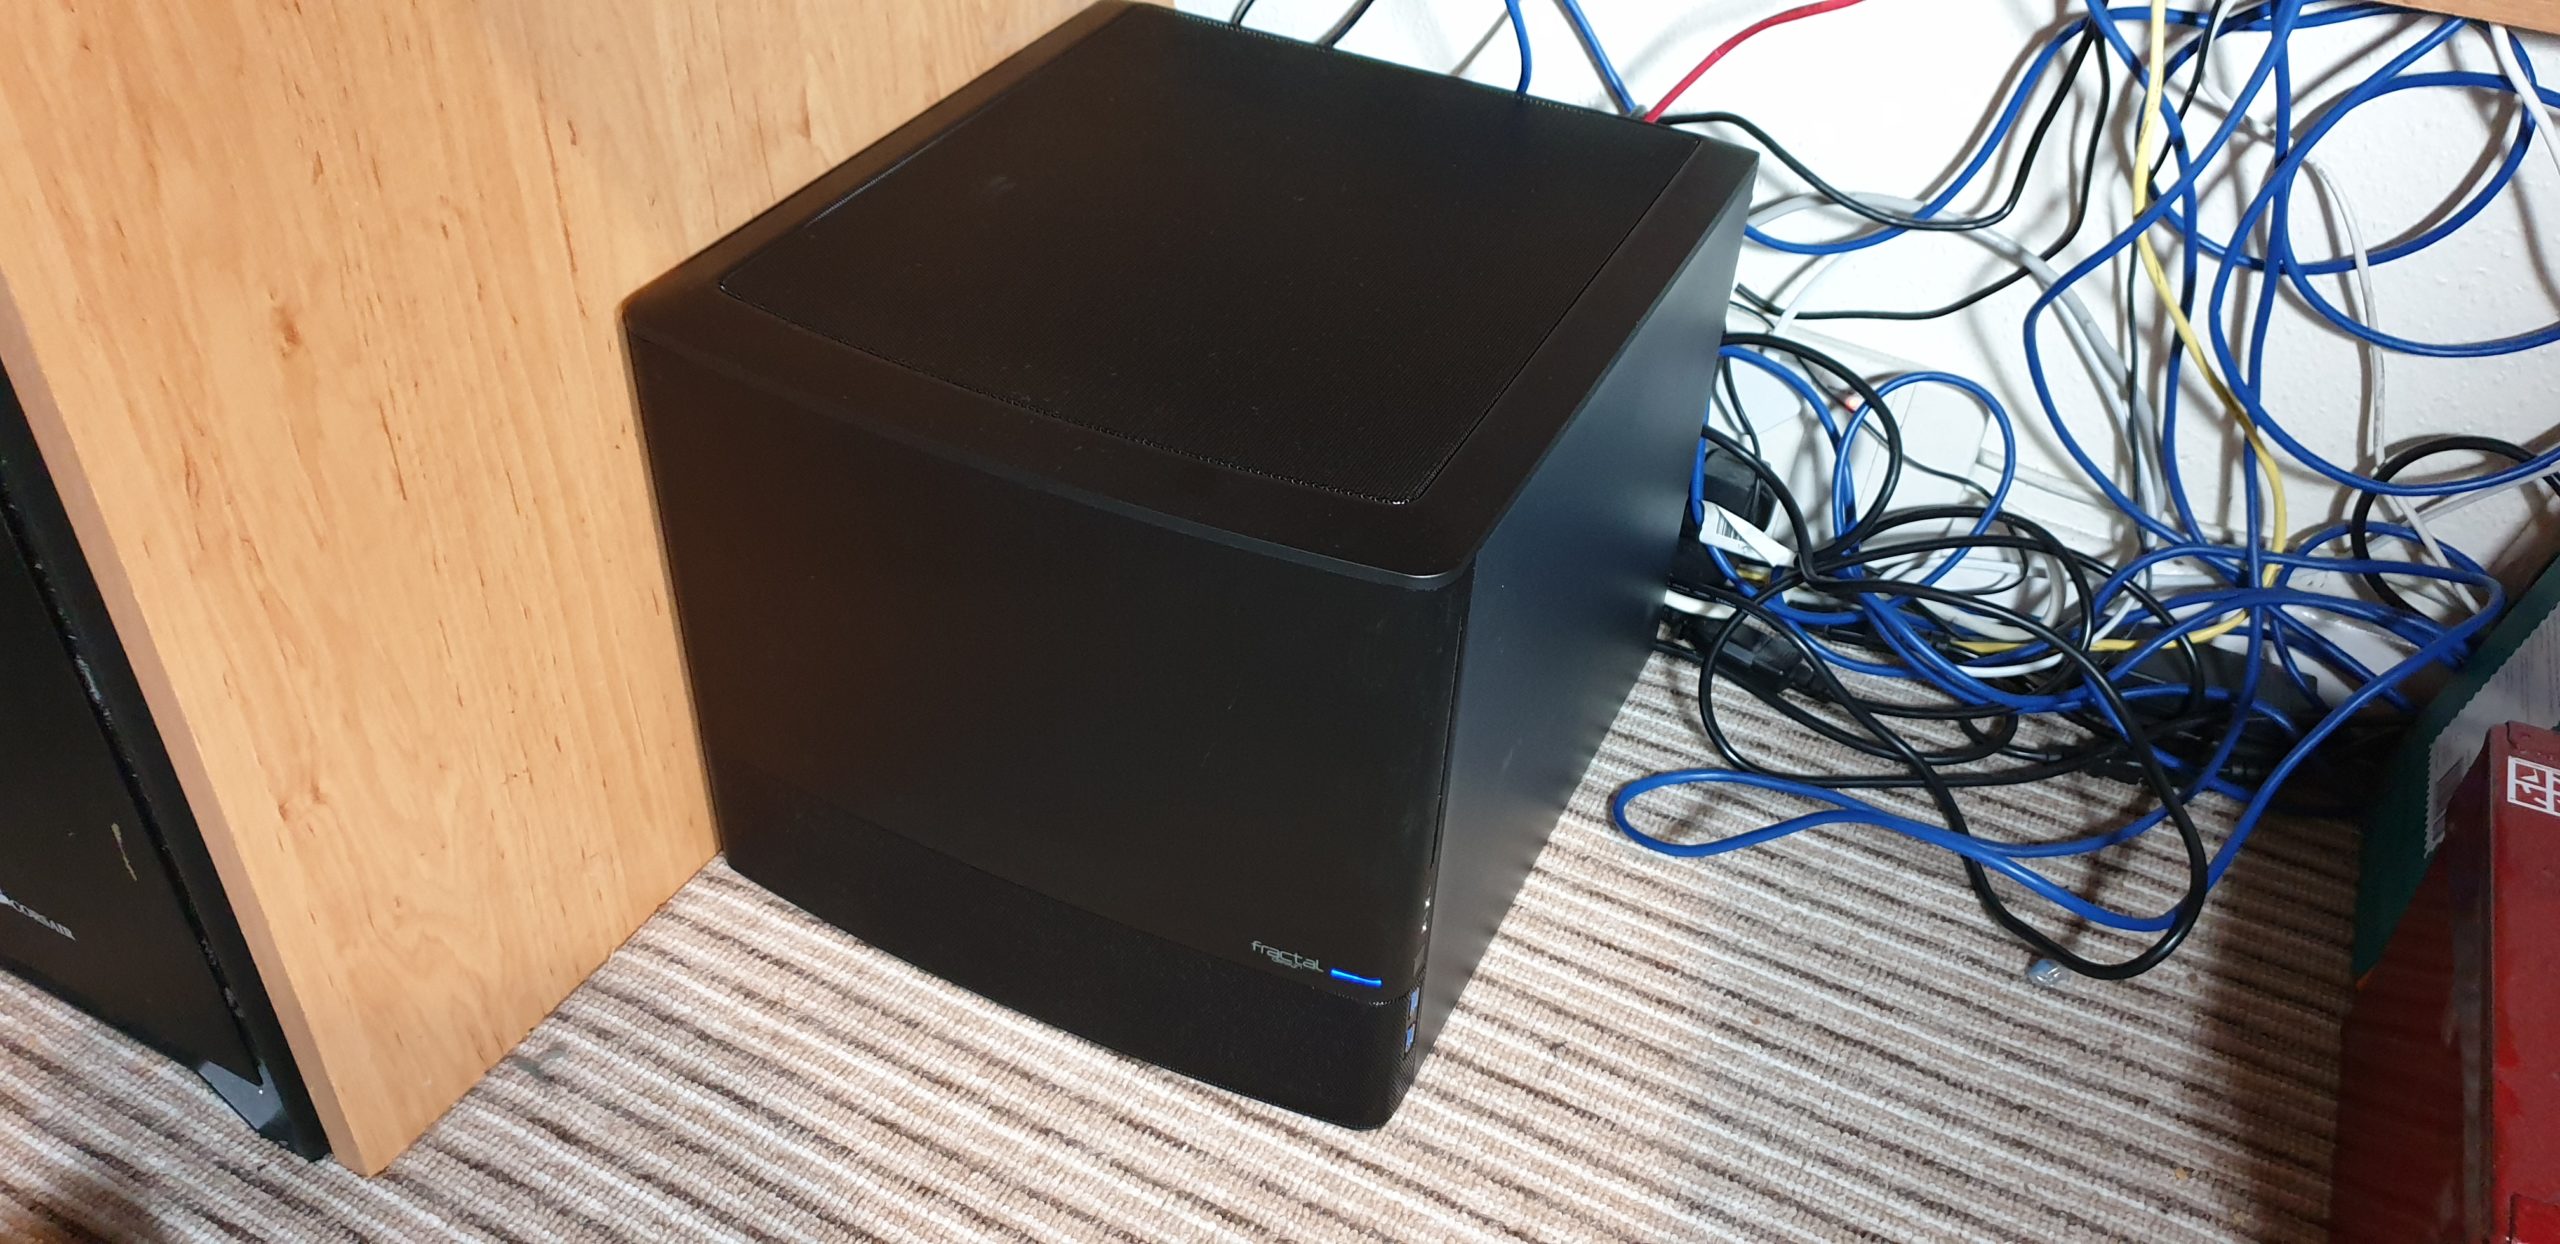 A black computer "cube" nestled under a desk, amongst cables.